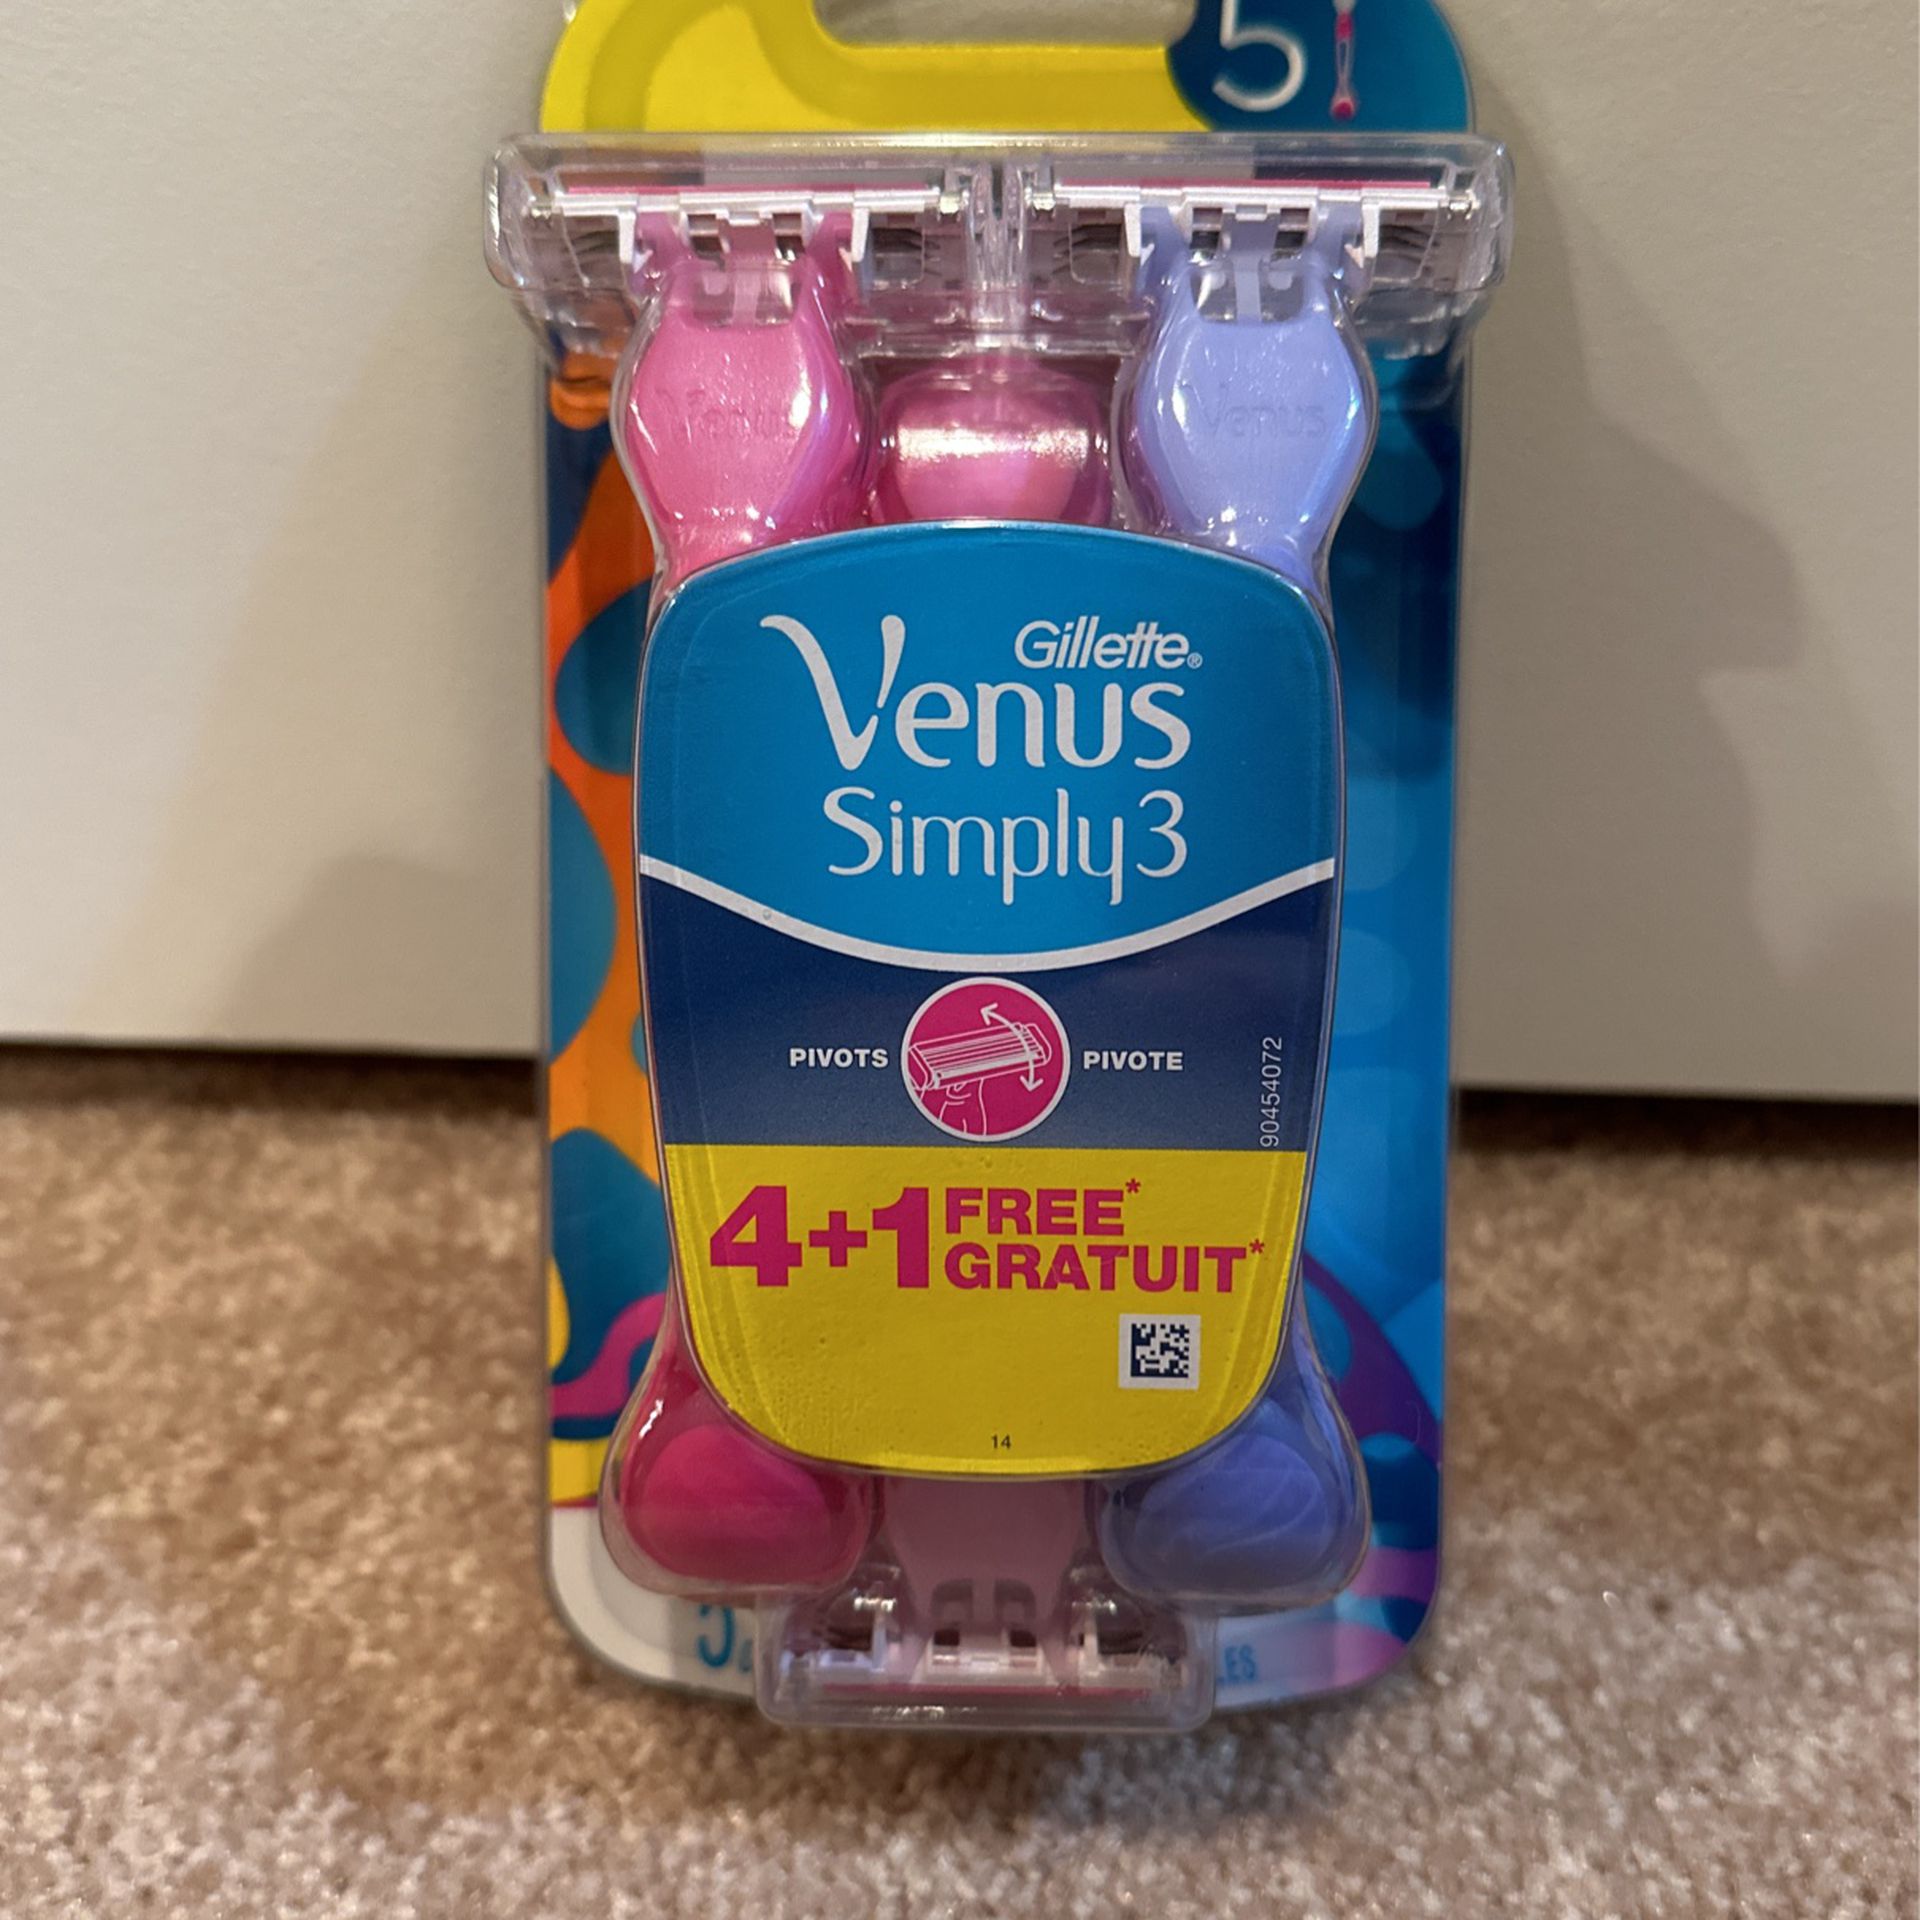 5-pack Venus razors